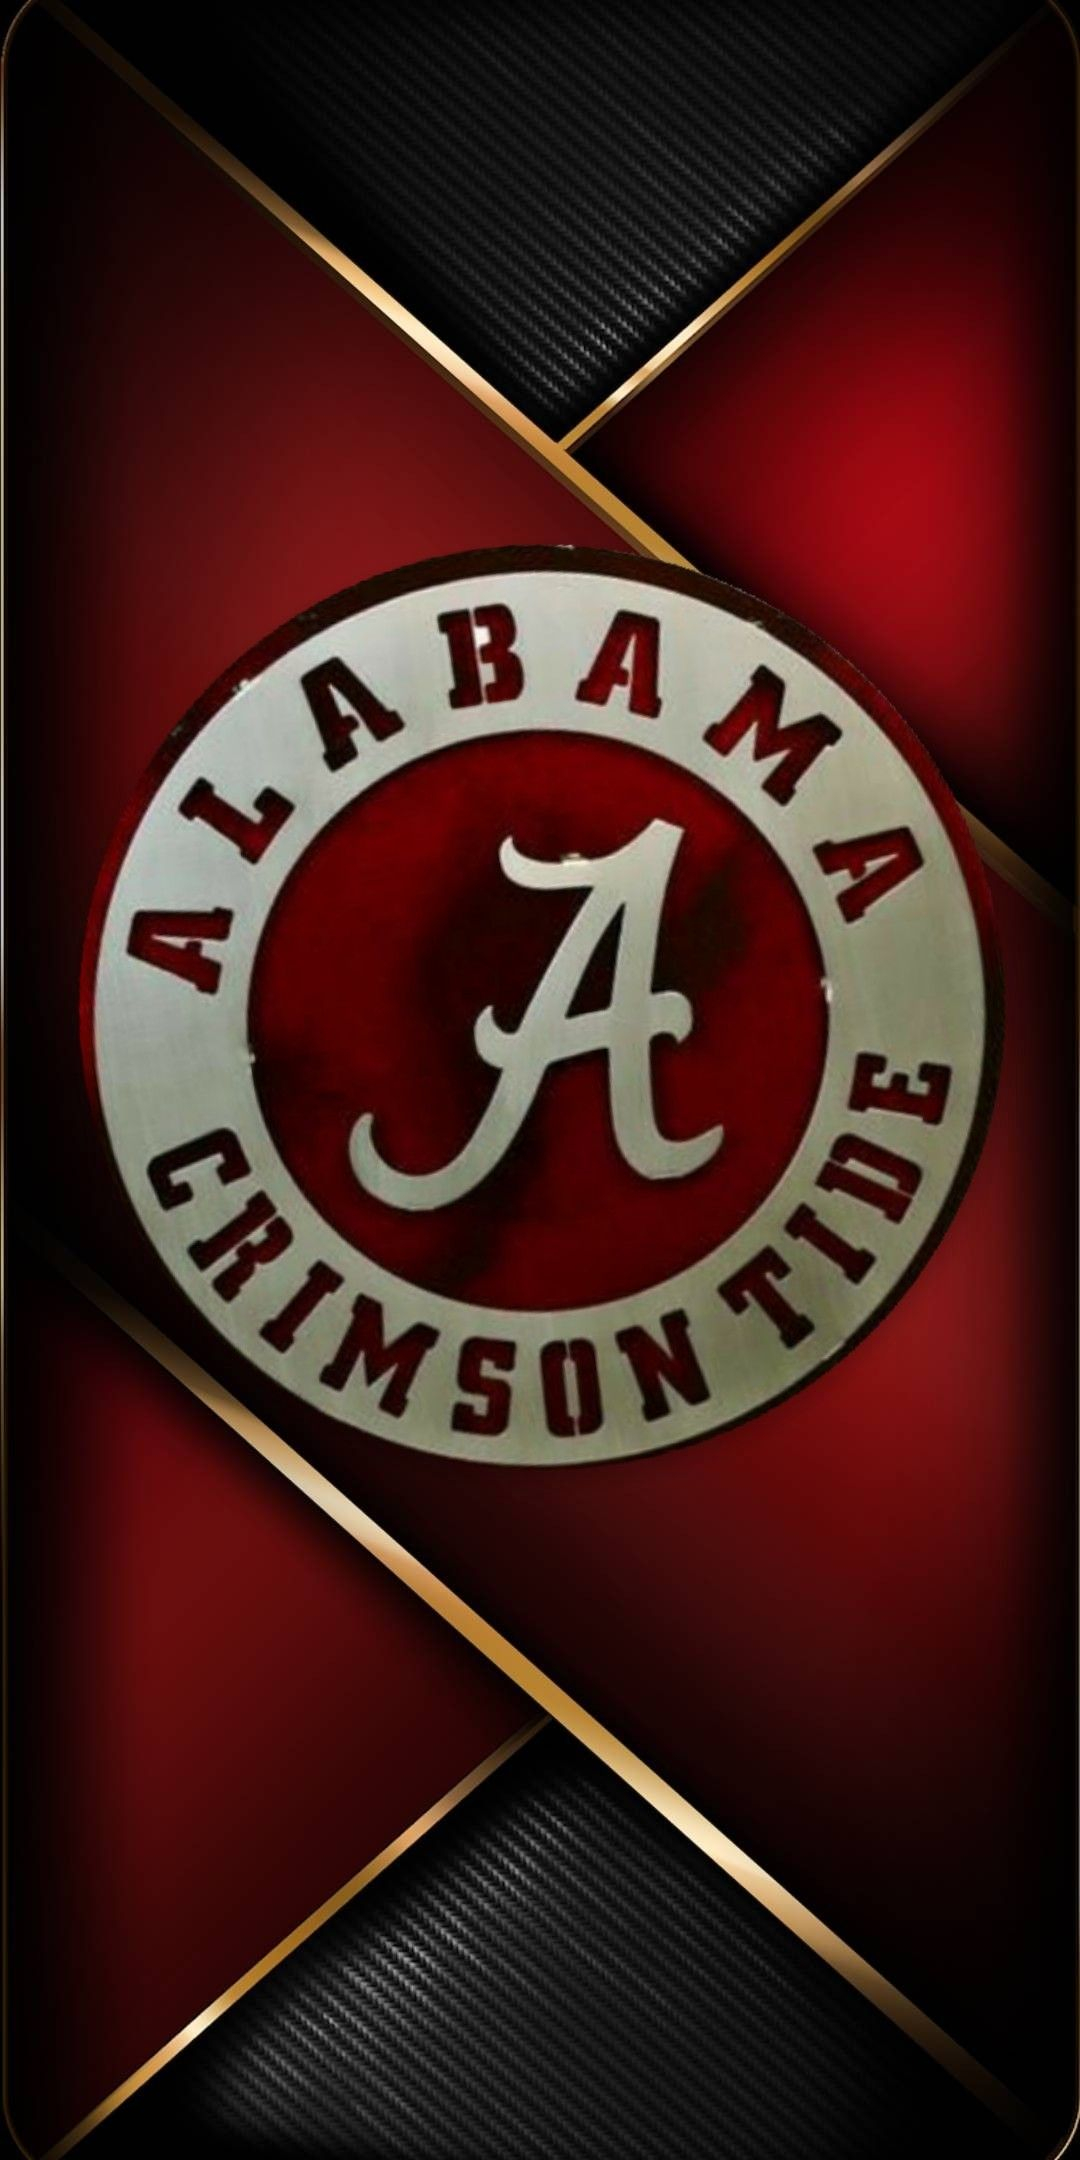 1080x2160 ROLL TIDE | Alabama crimson tide football wallpaper, Alabama crimson tide logo, Alabama crimson tide football